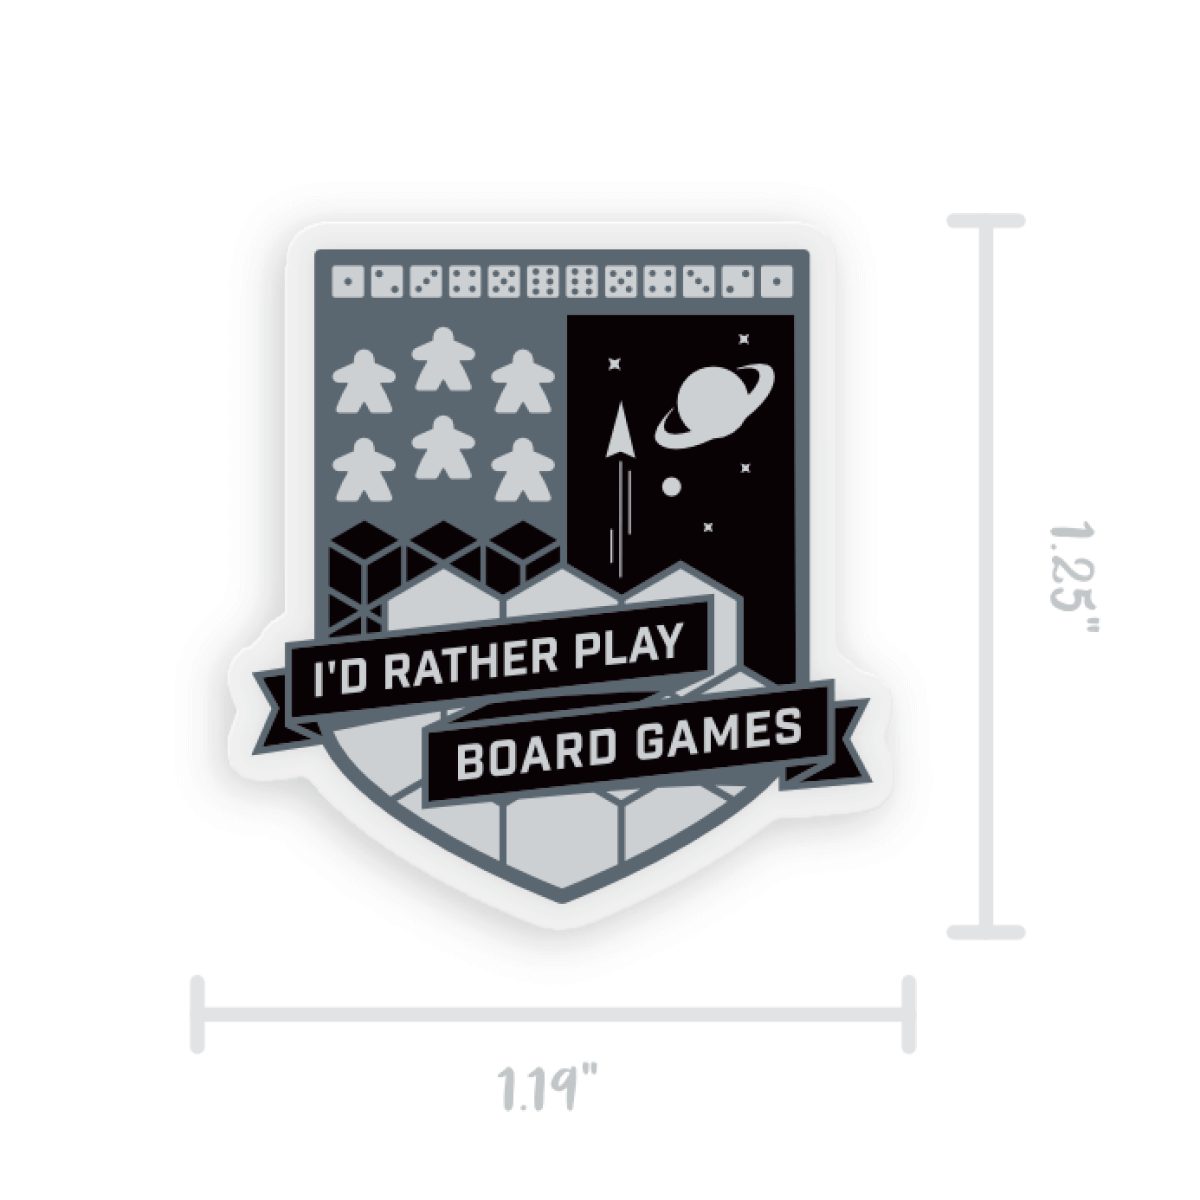 Pin on Games: Board